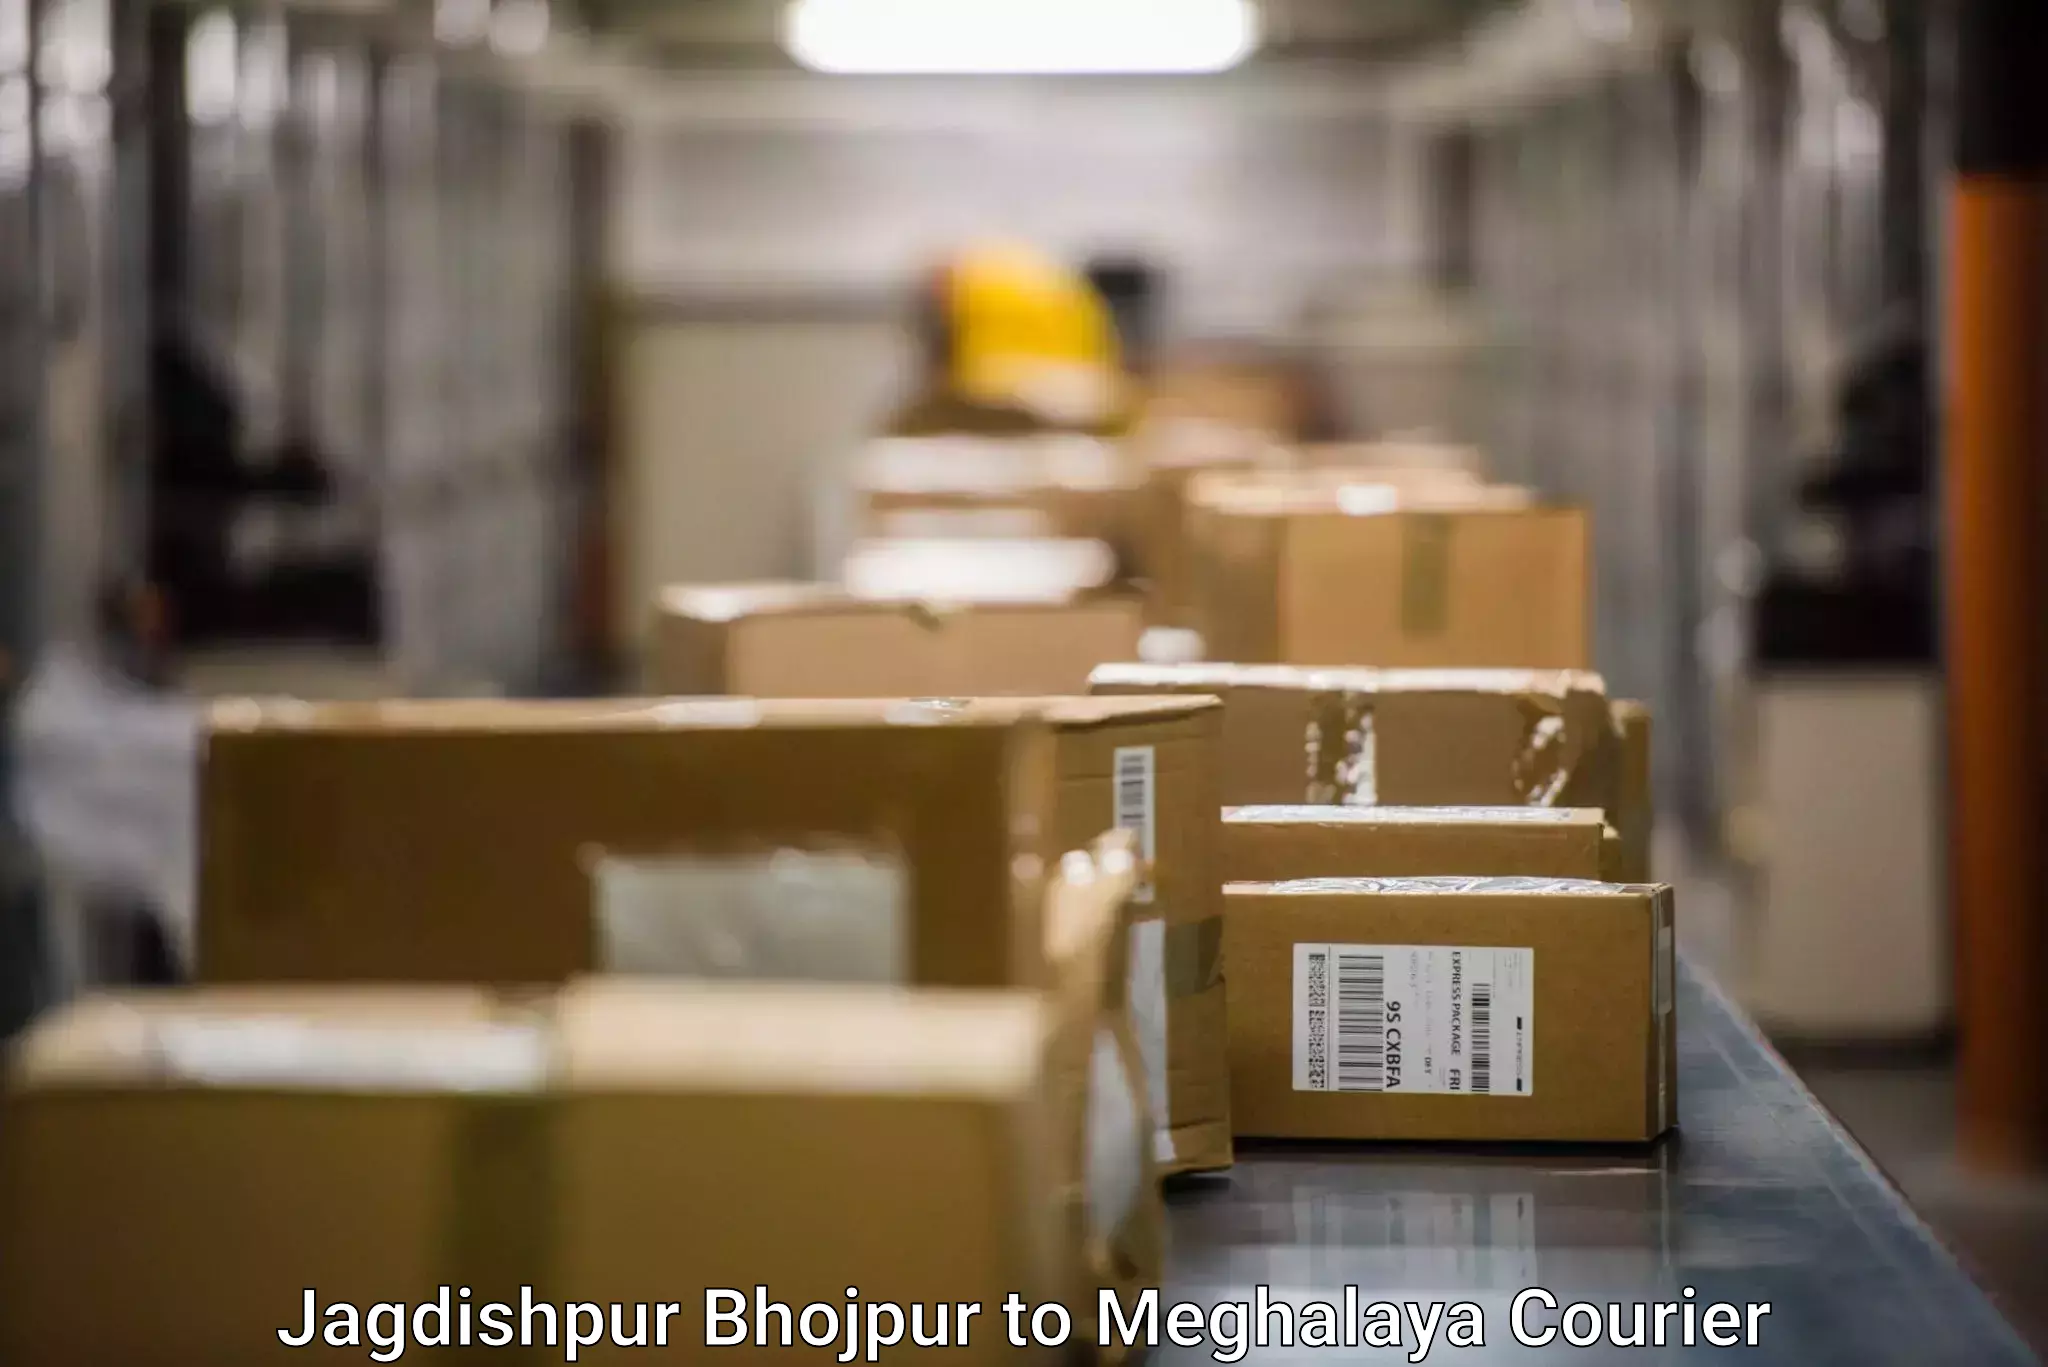 Courier service innovation Jagdishpur Bhojpur to Jowai